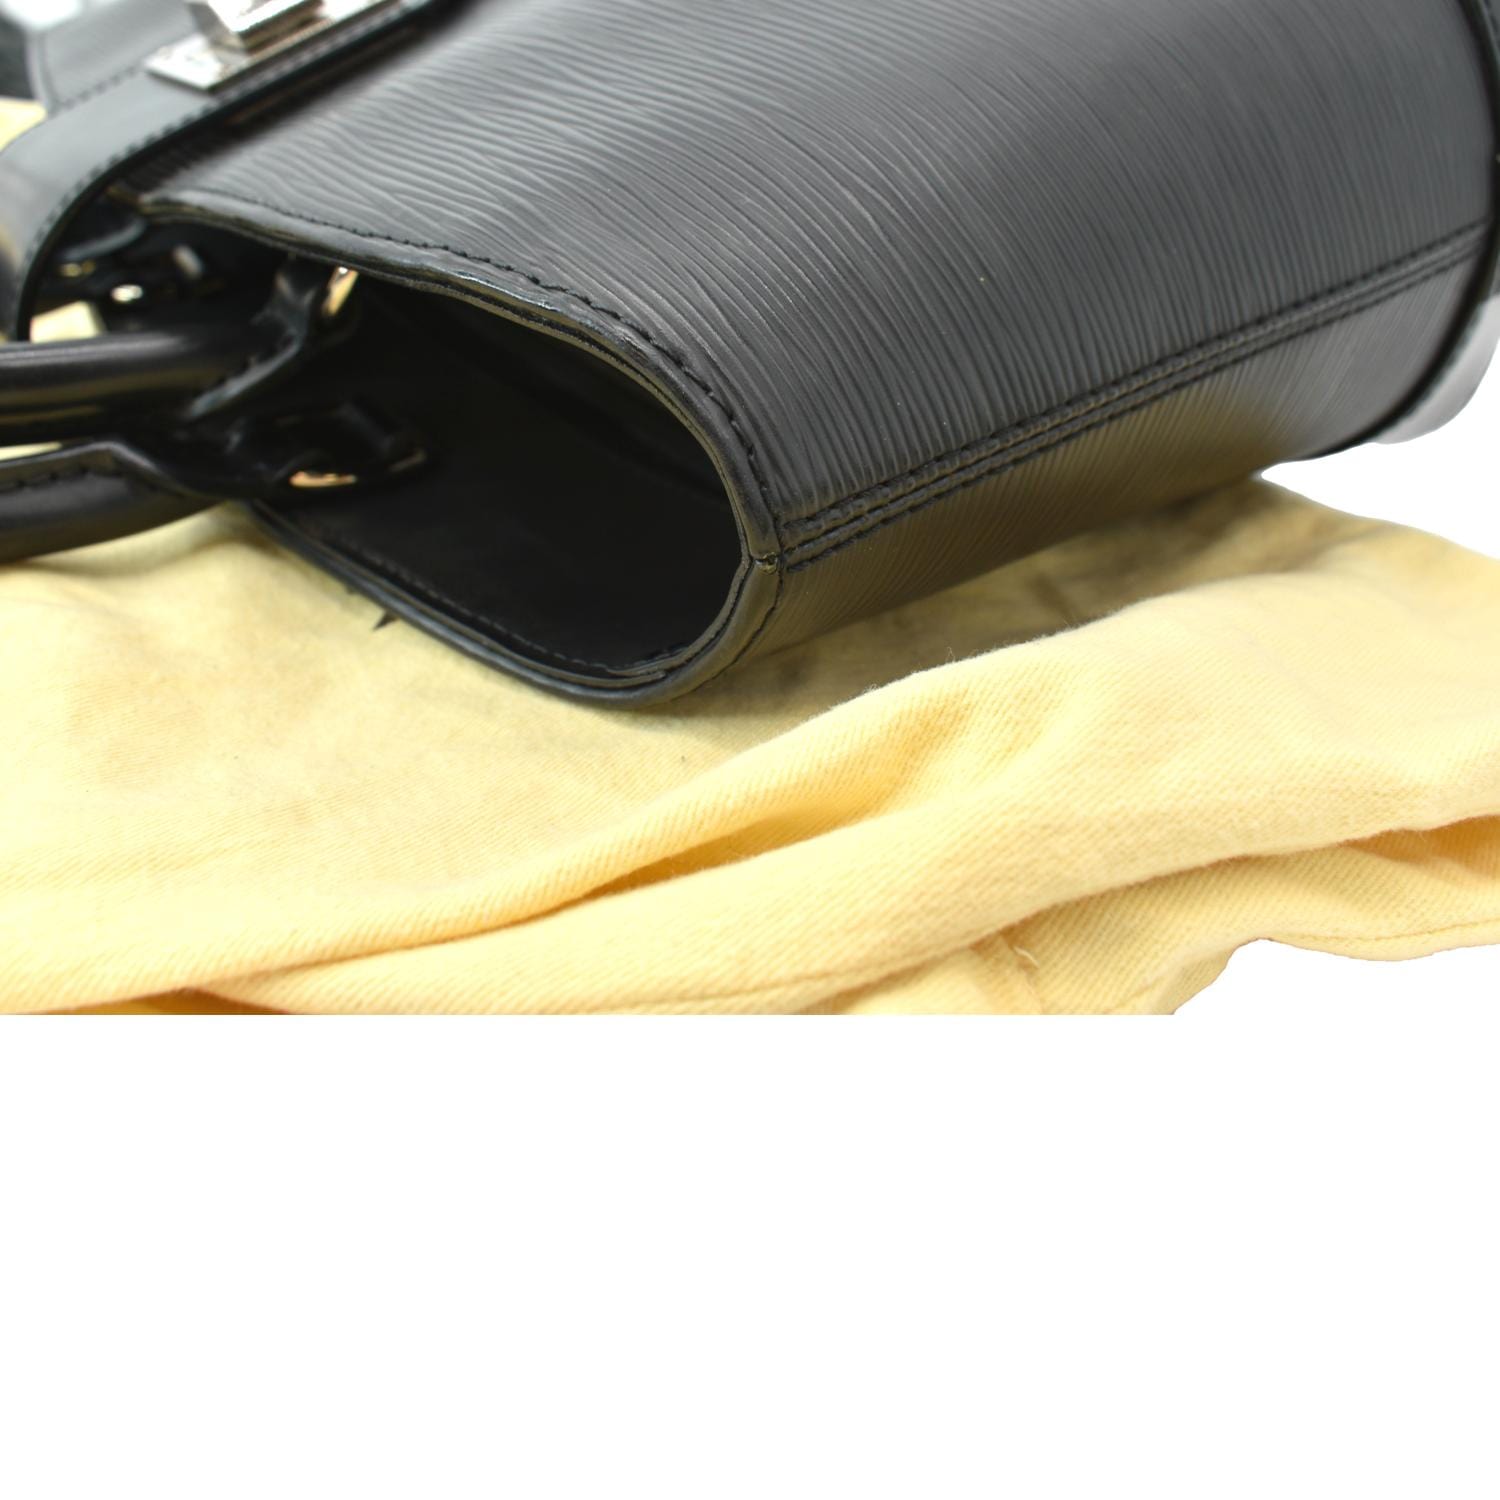 Louis Vuitton Mirabeau Handbag in Black Patent EPI Leather